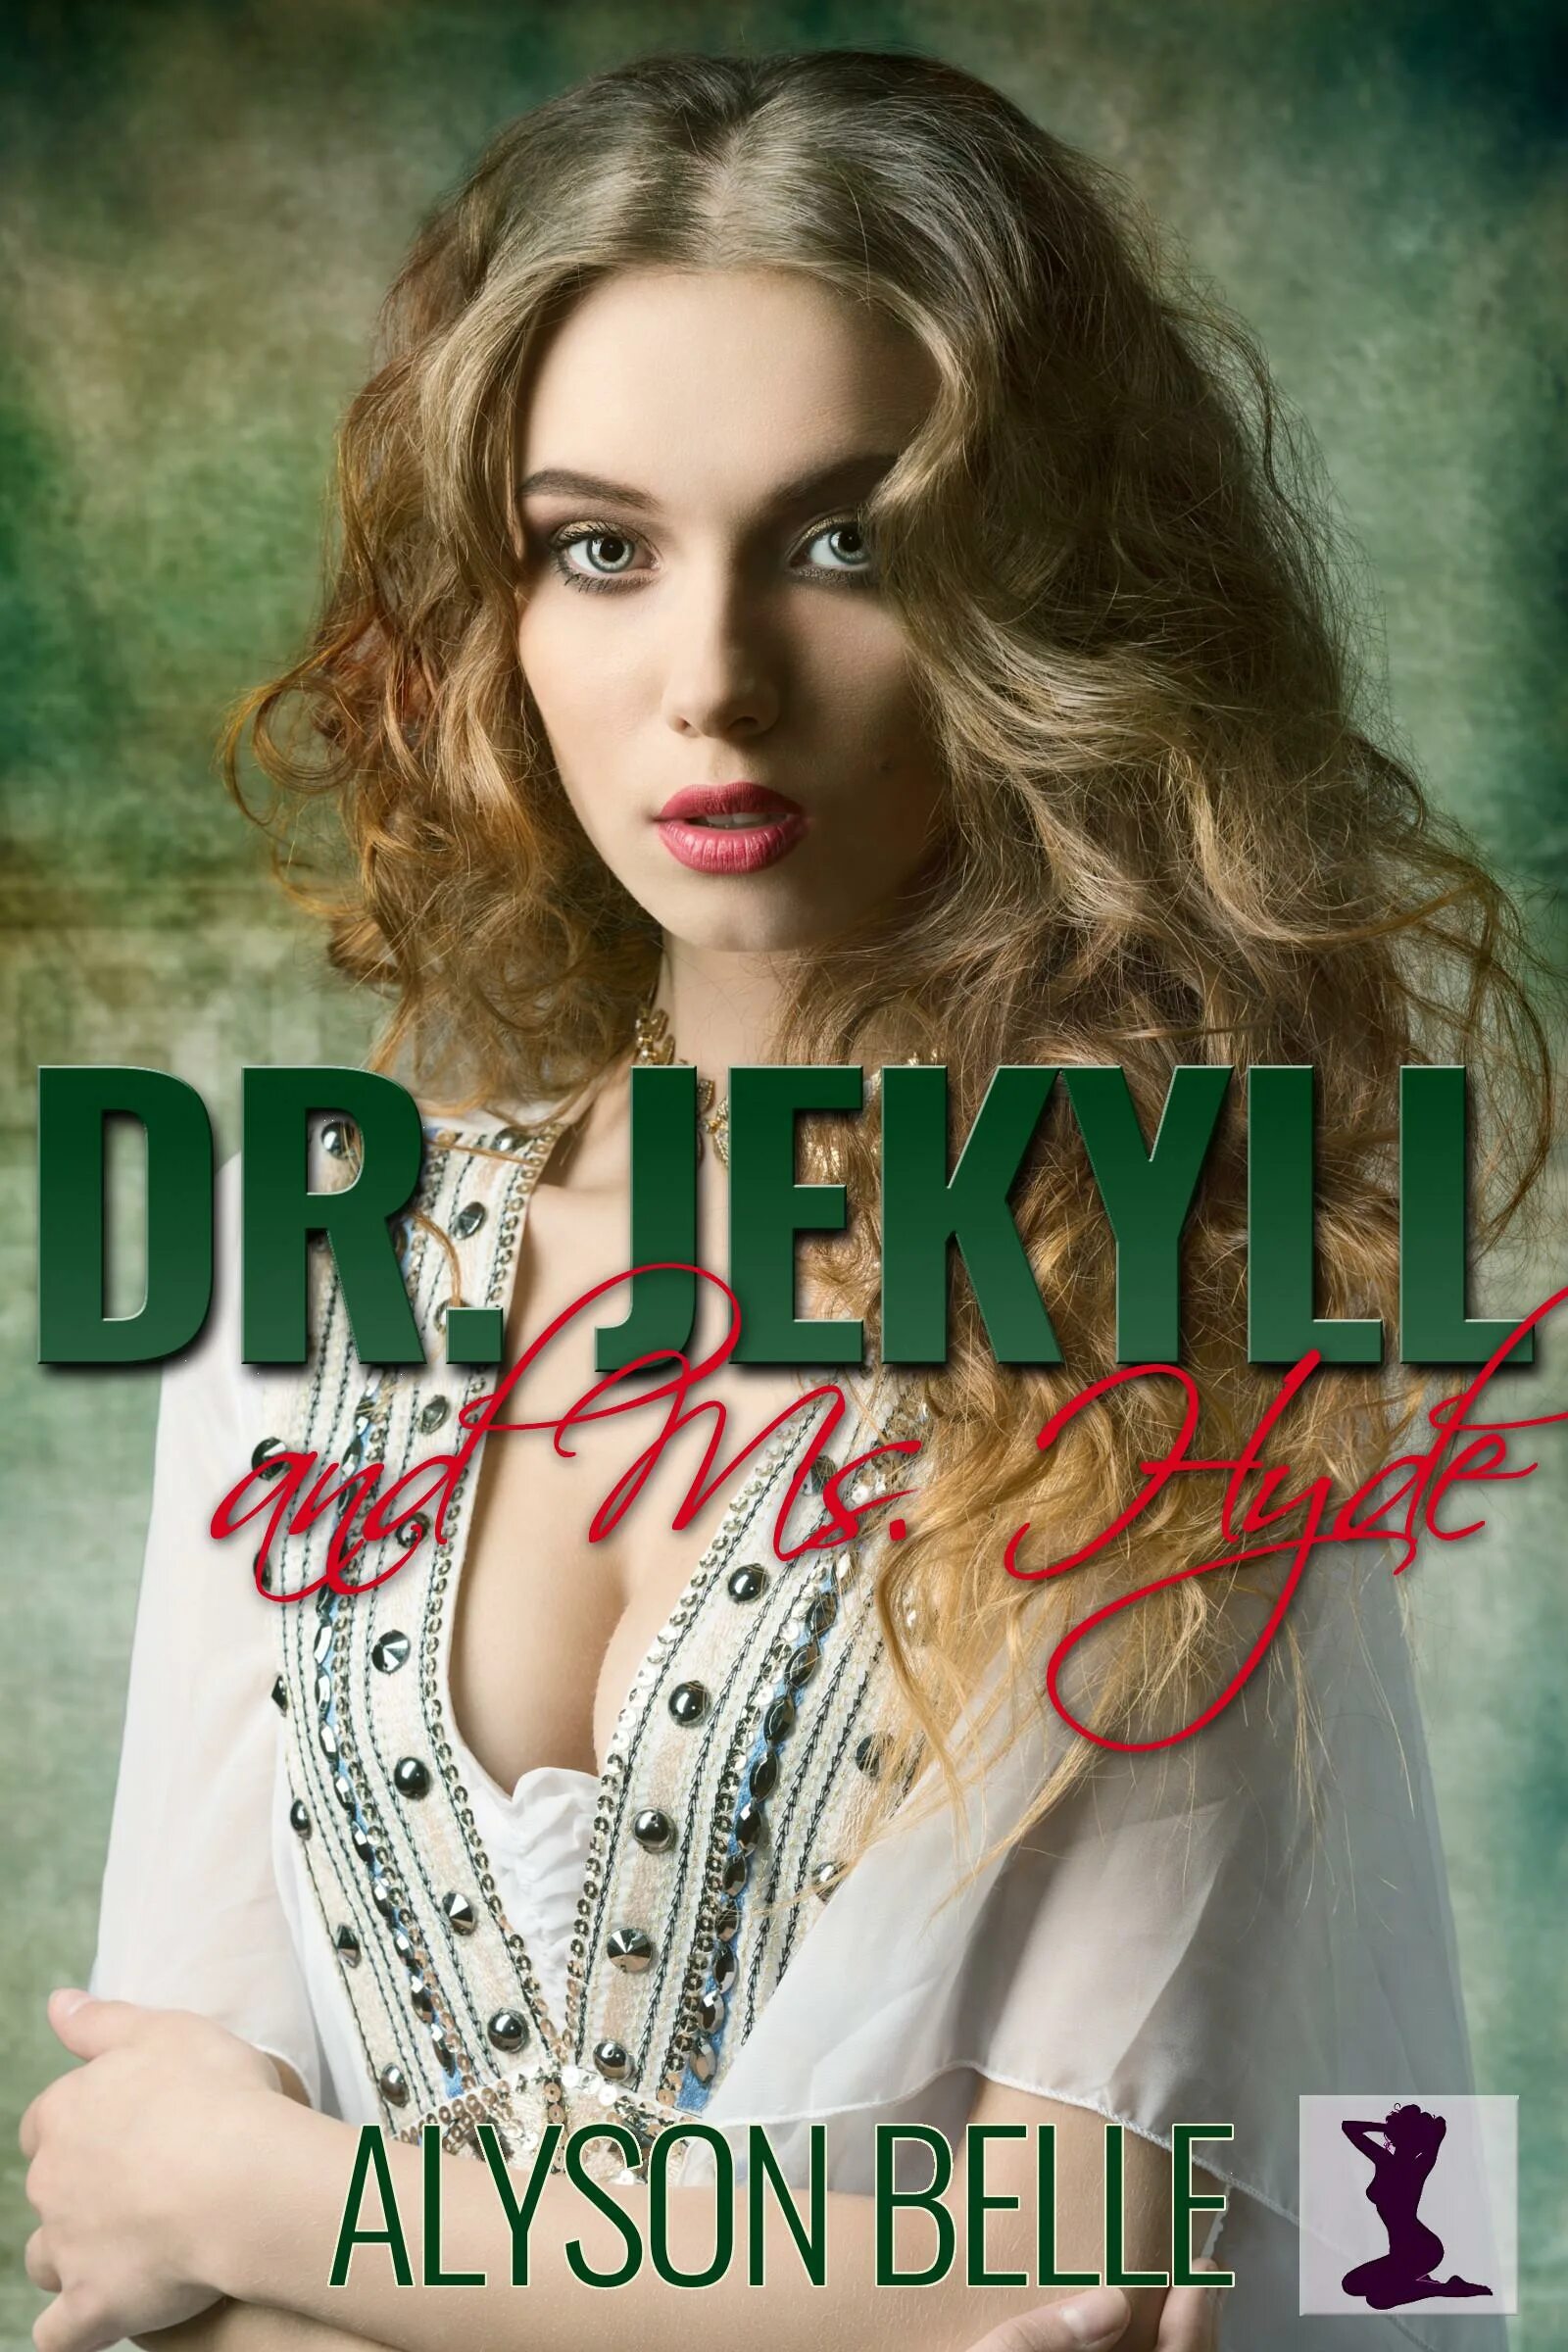 Хайд аудиокнига. Dr Jekyll MS Hyde. Alyson Belle. Dr. Jekyll and MS. Hyde Art. Гусева Belle обложка.